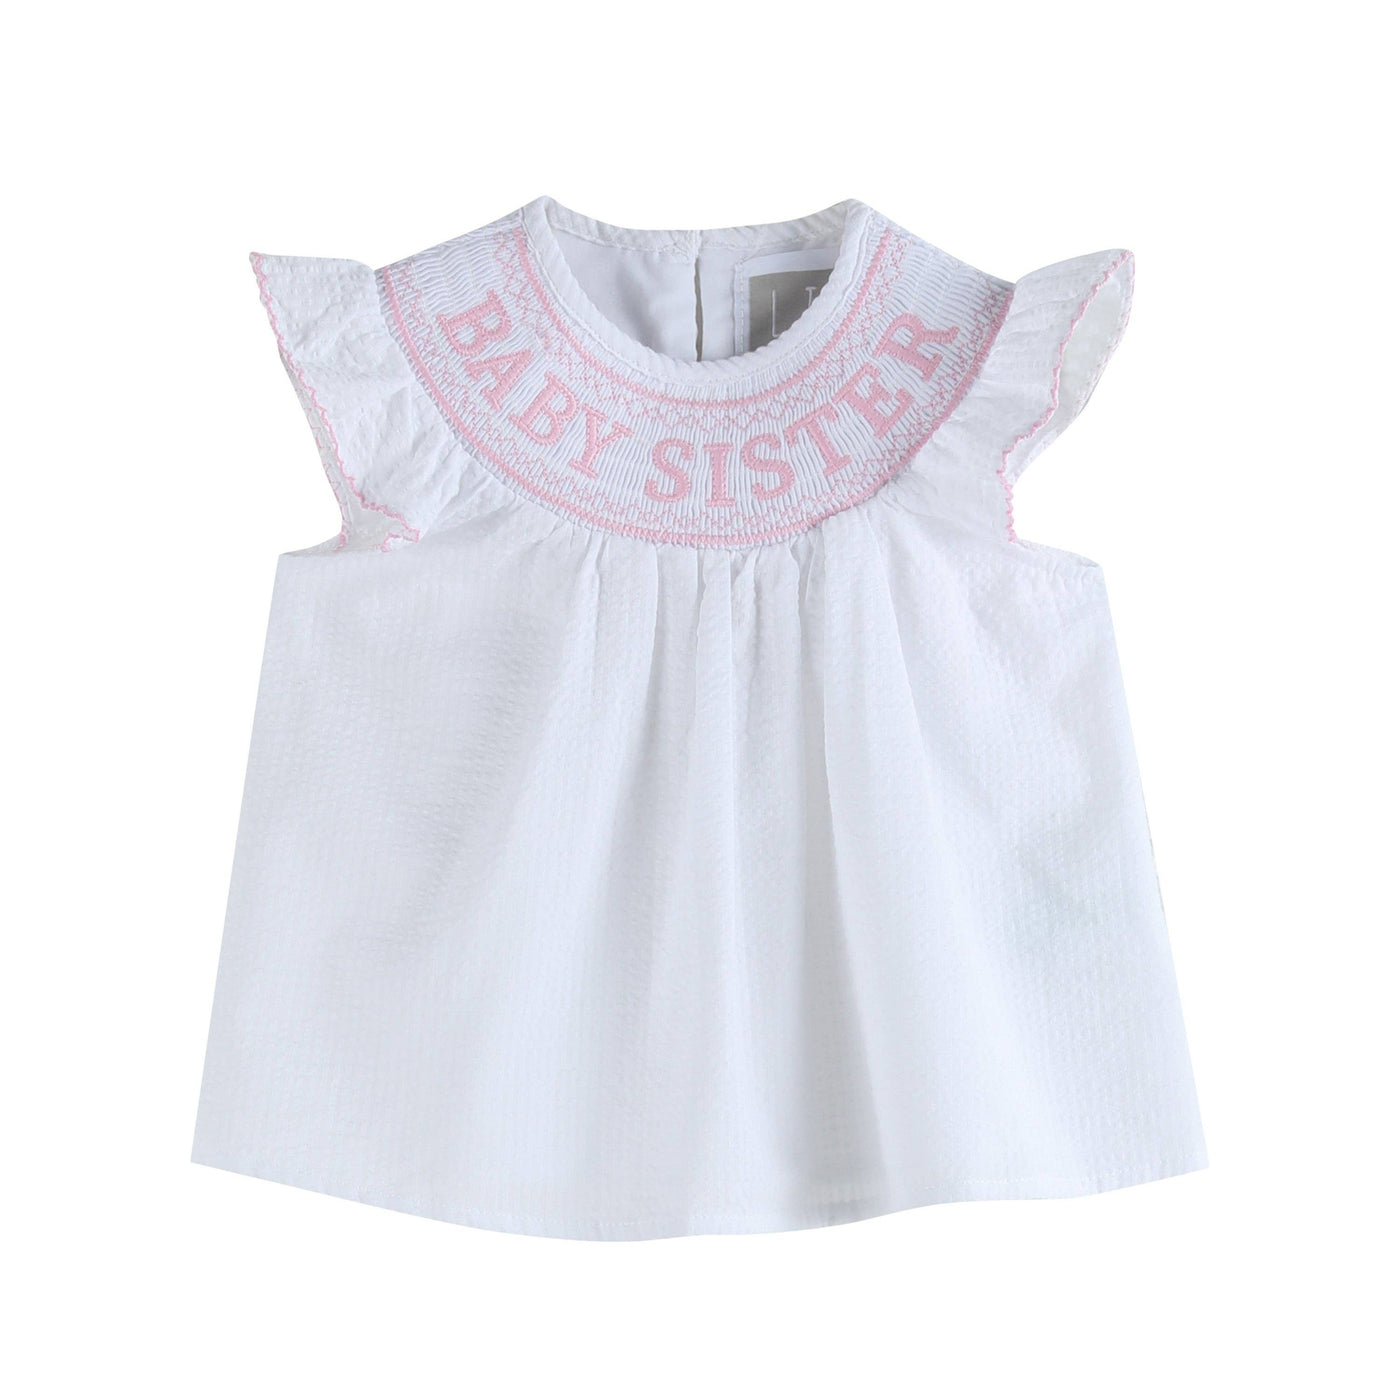 White Baby Sister Smocked Dress and Bloomer Set